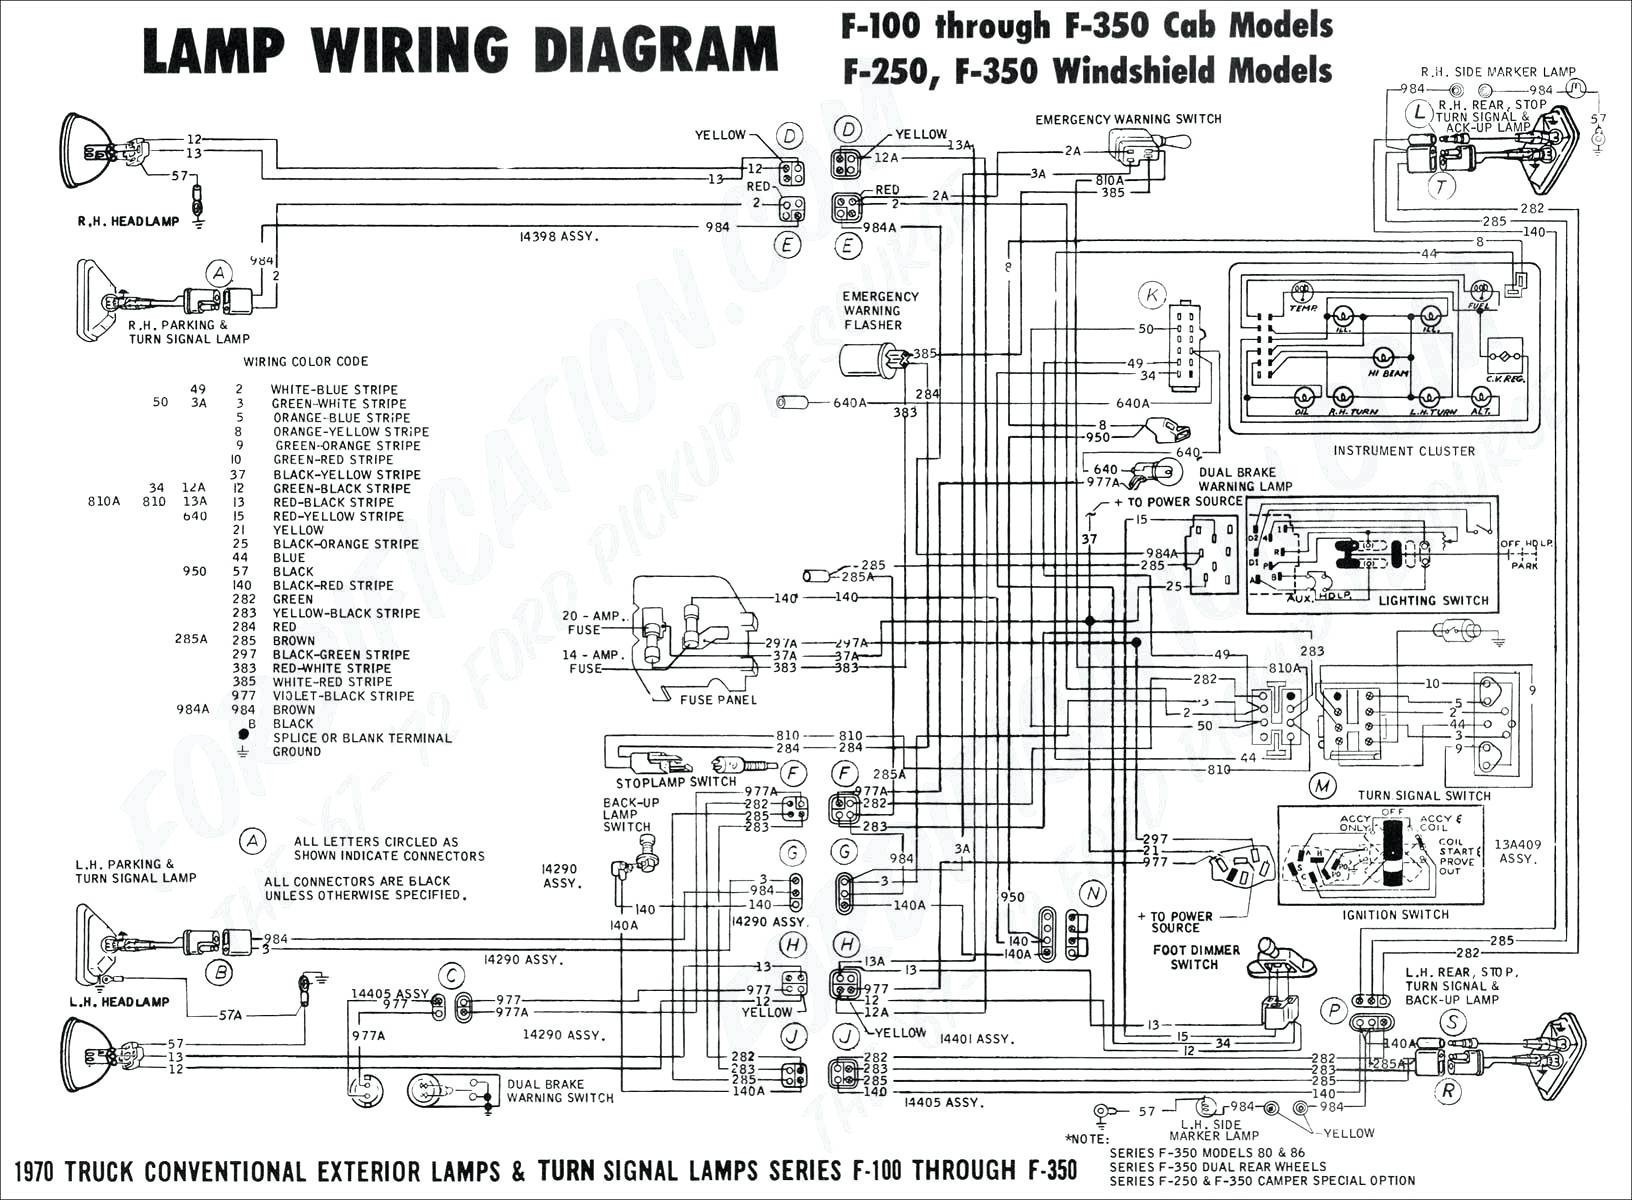 Undercarriage Of A Car Diagram American Auto Wire Diagrams Wiring Diagram Read Of Undercarriage Of A Car Diagram